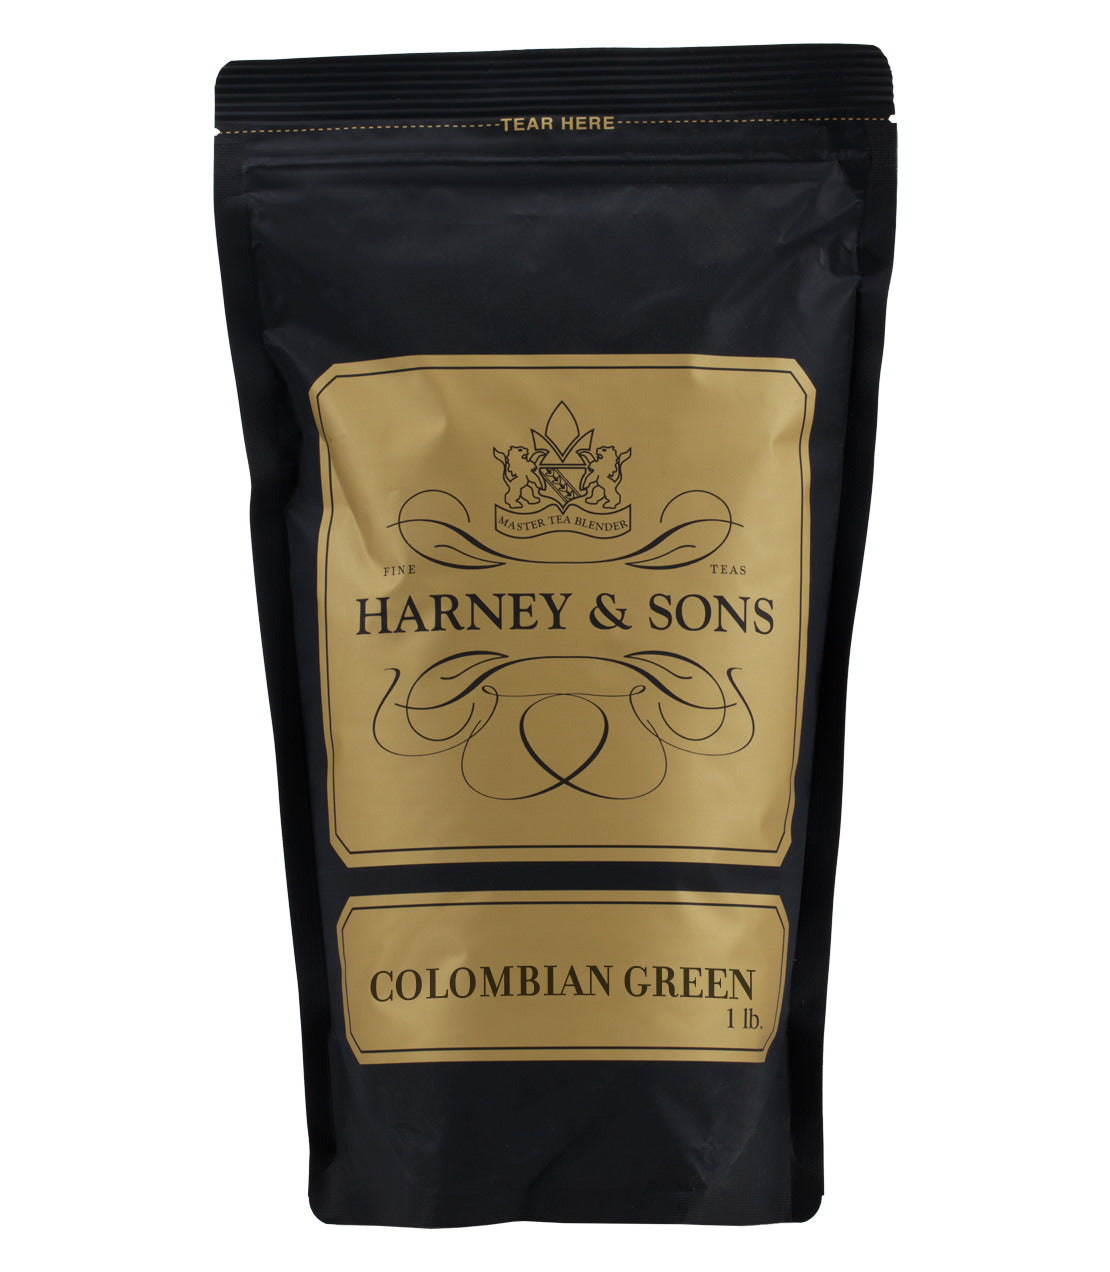 Colombian Green - Loose 1 lb. Bag - Harney & Sons Fine Teas